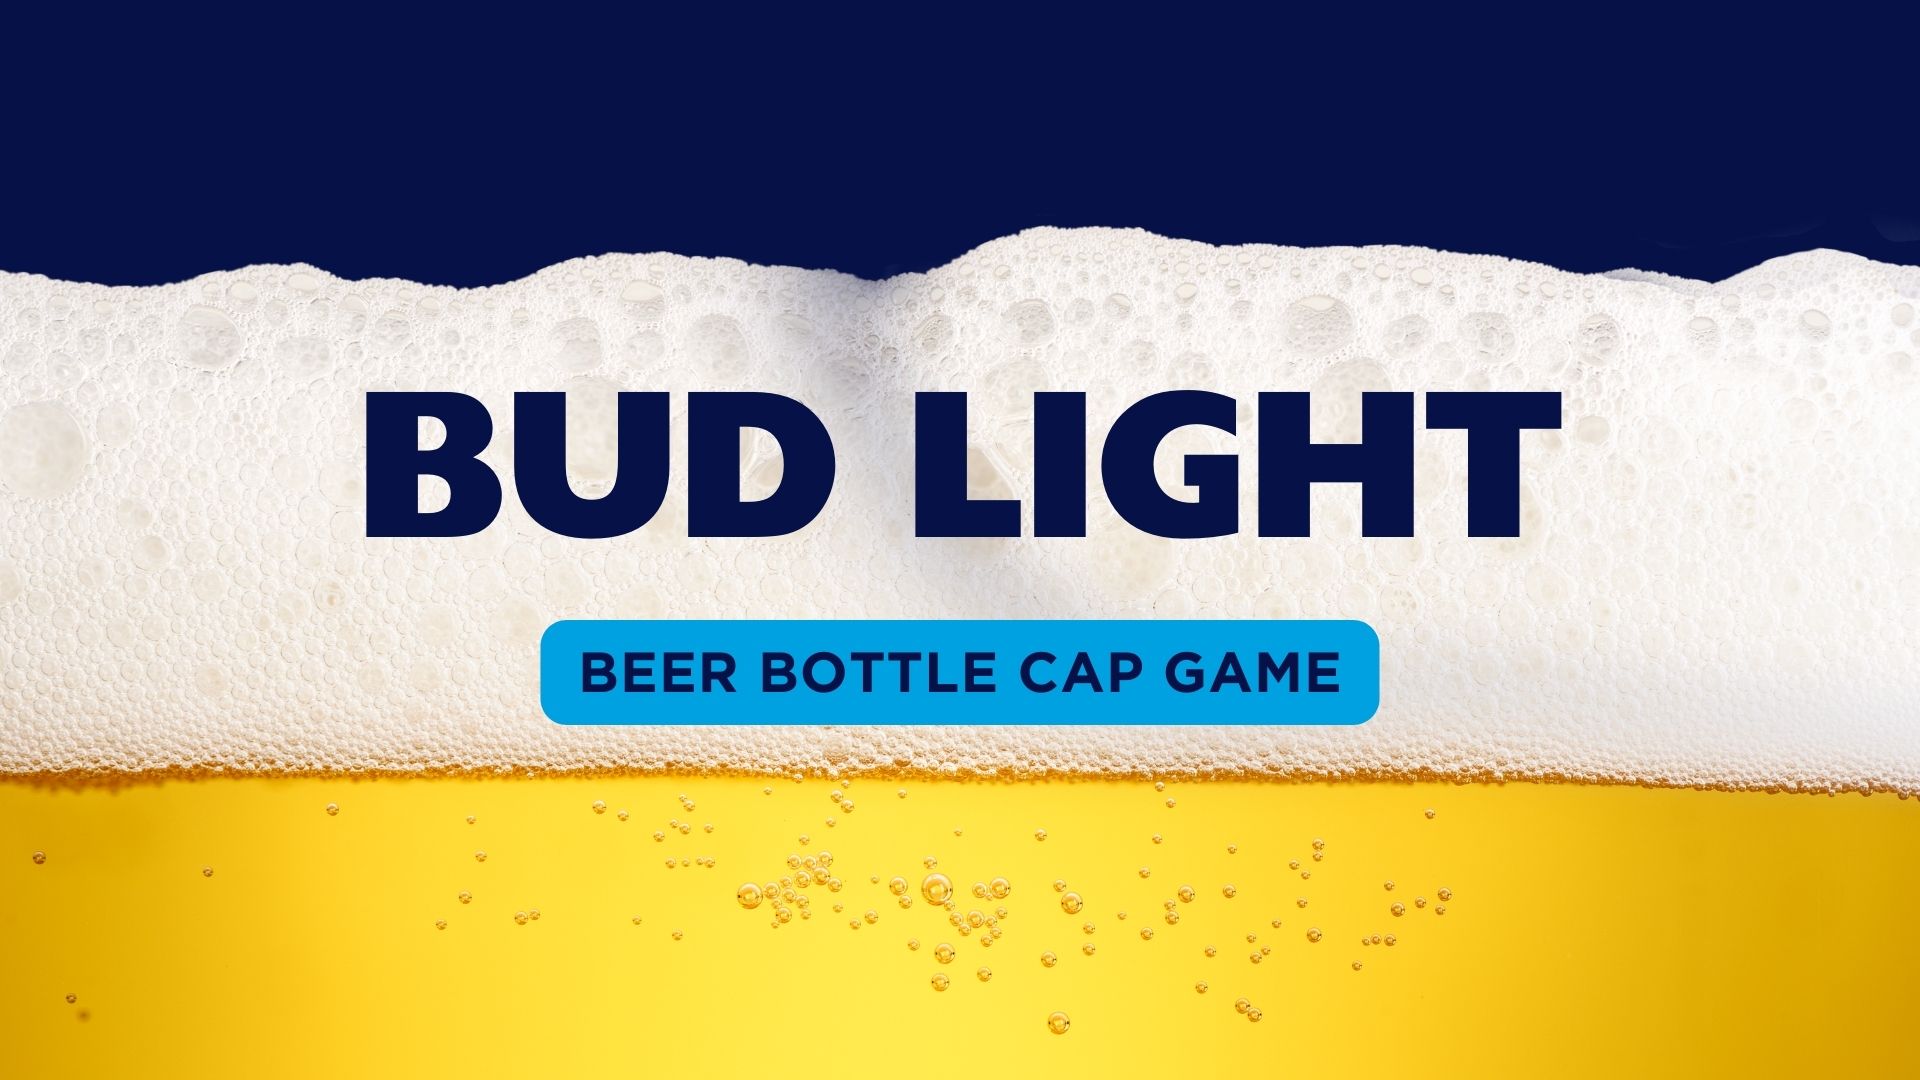 Budlight Beer Bottle Cap Game